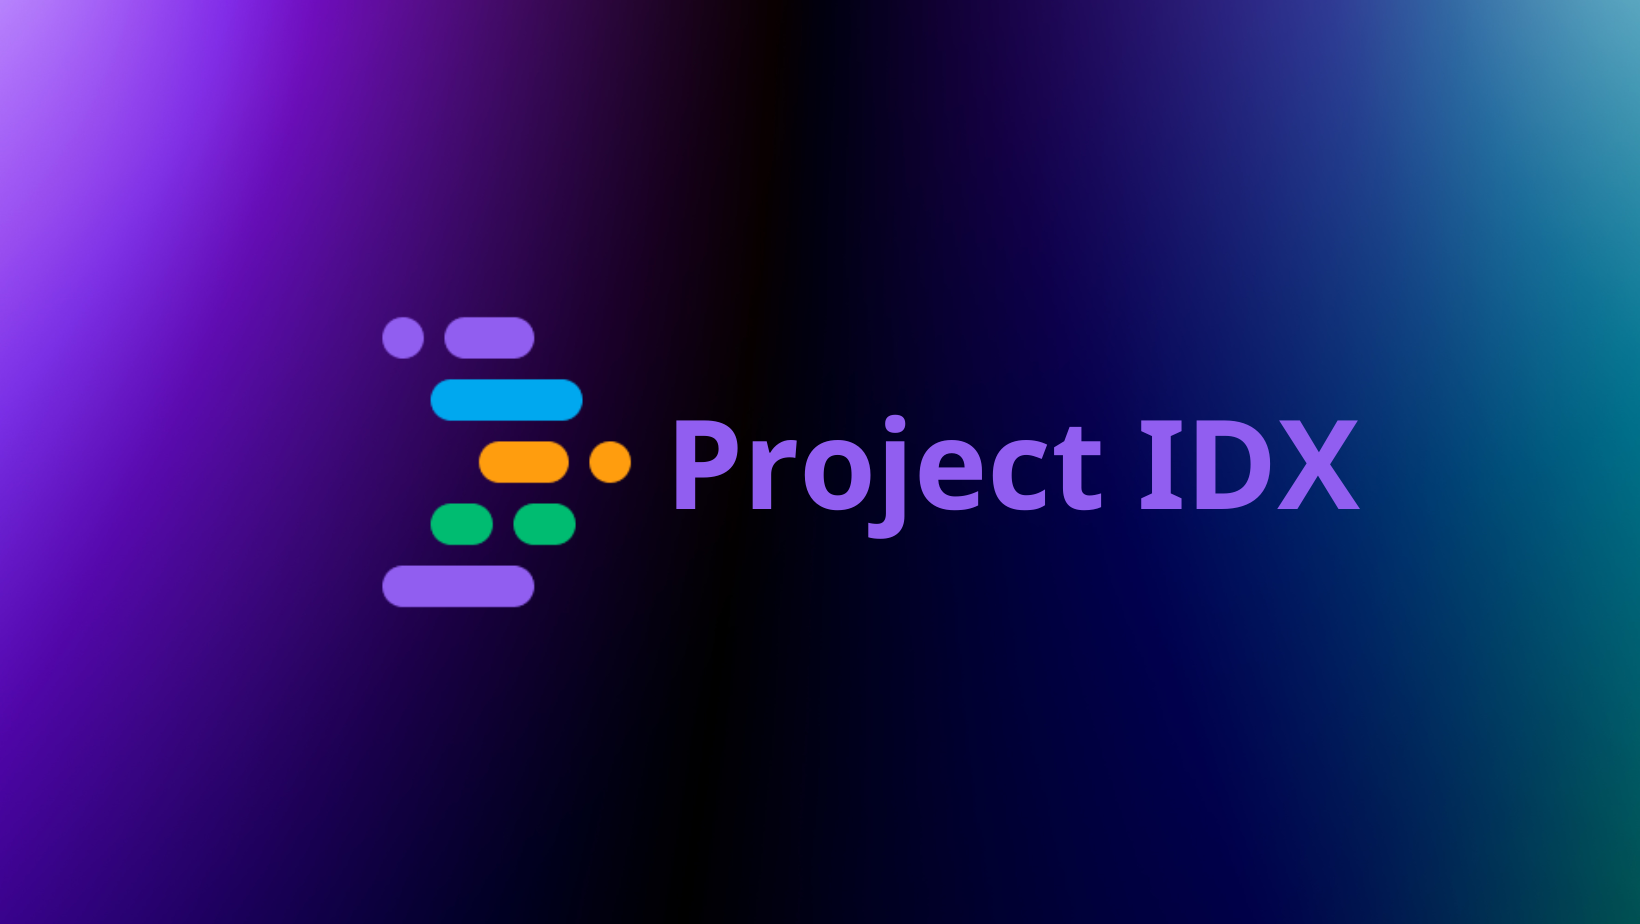 Project IDX là gì? Tìm hiểu về Google Project IDX